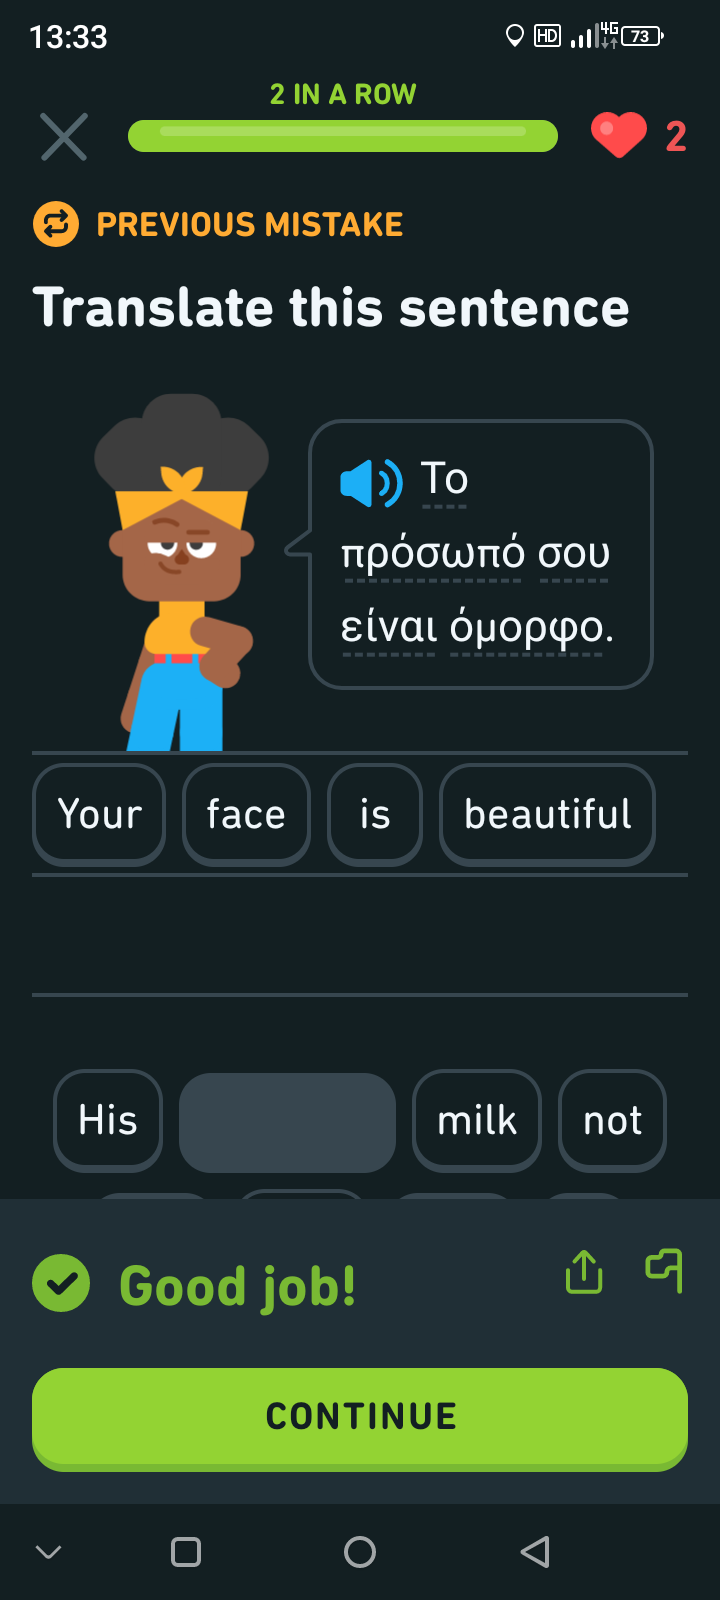 Duolingo Screenshot